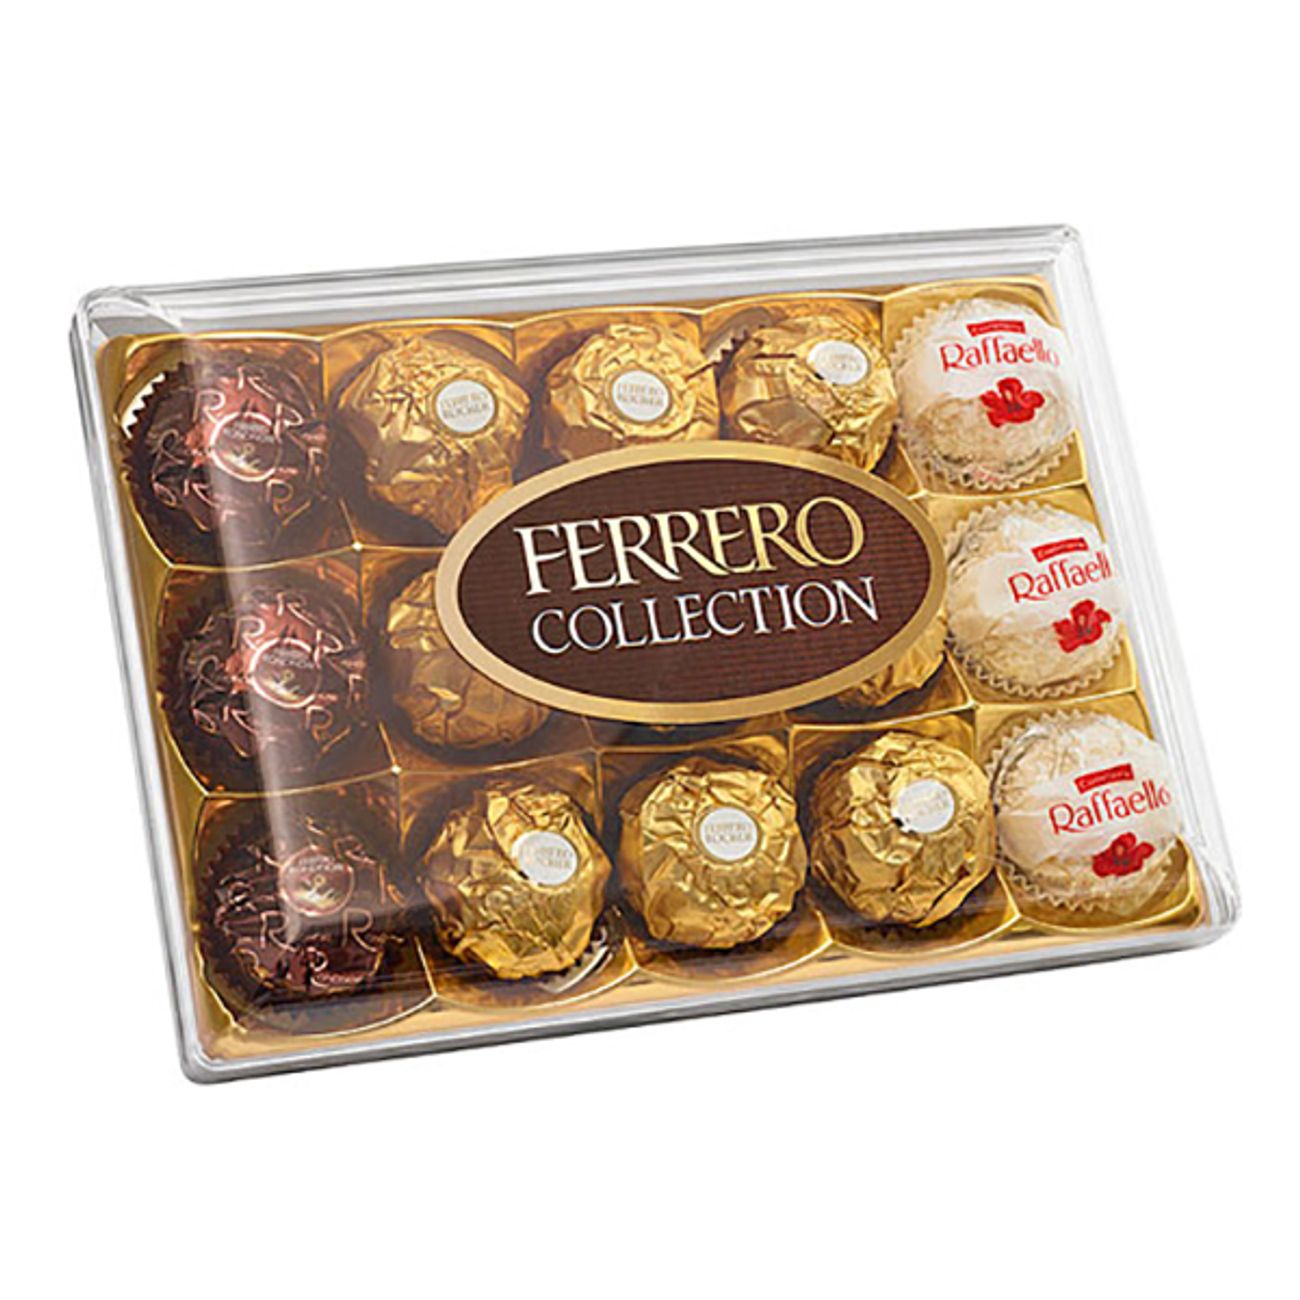 ferrero-collection-praliner-chokladask-77856-1